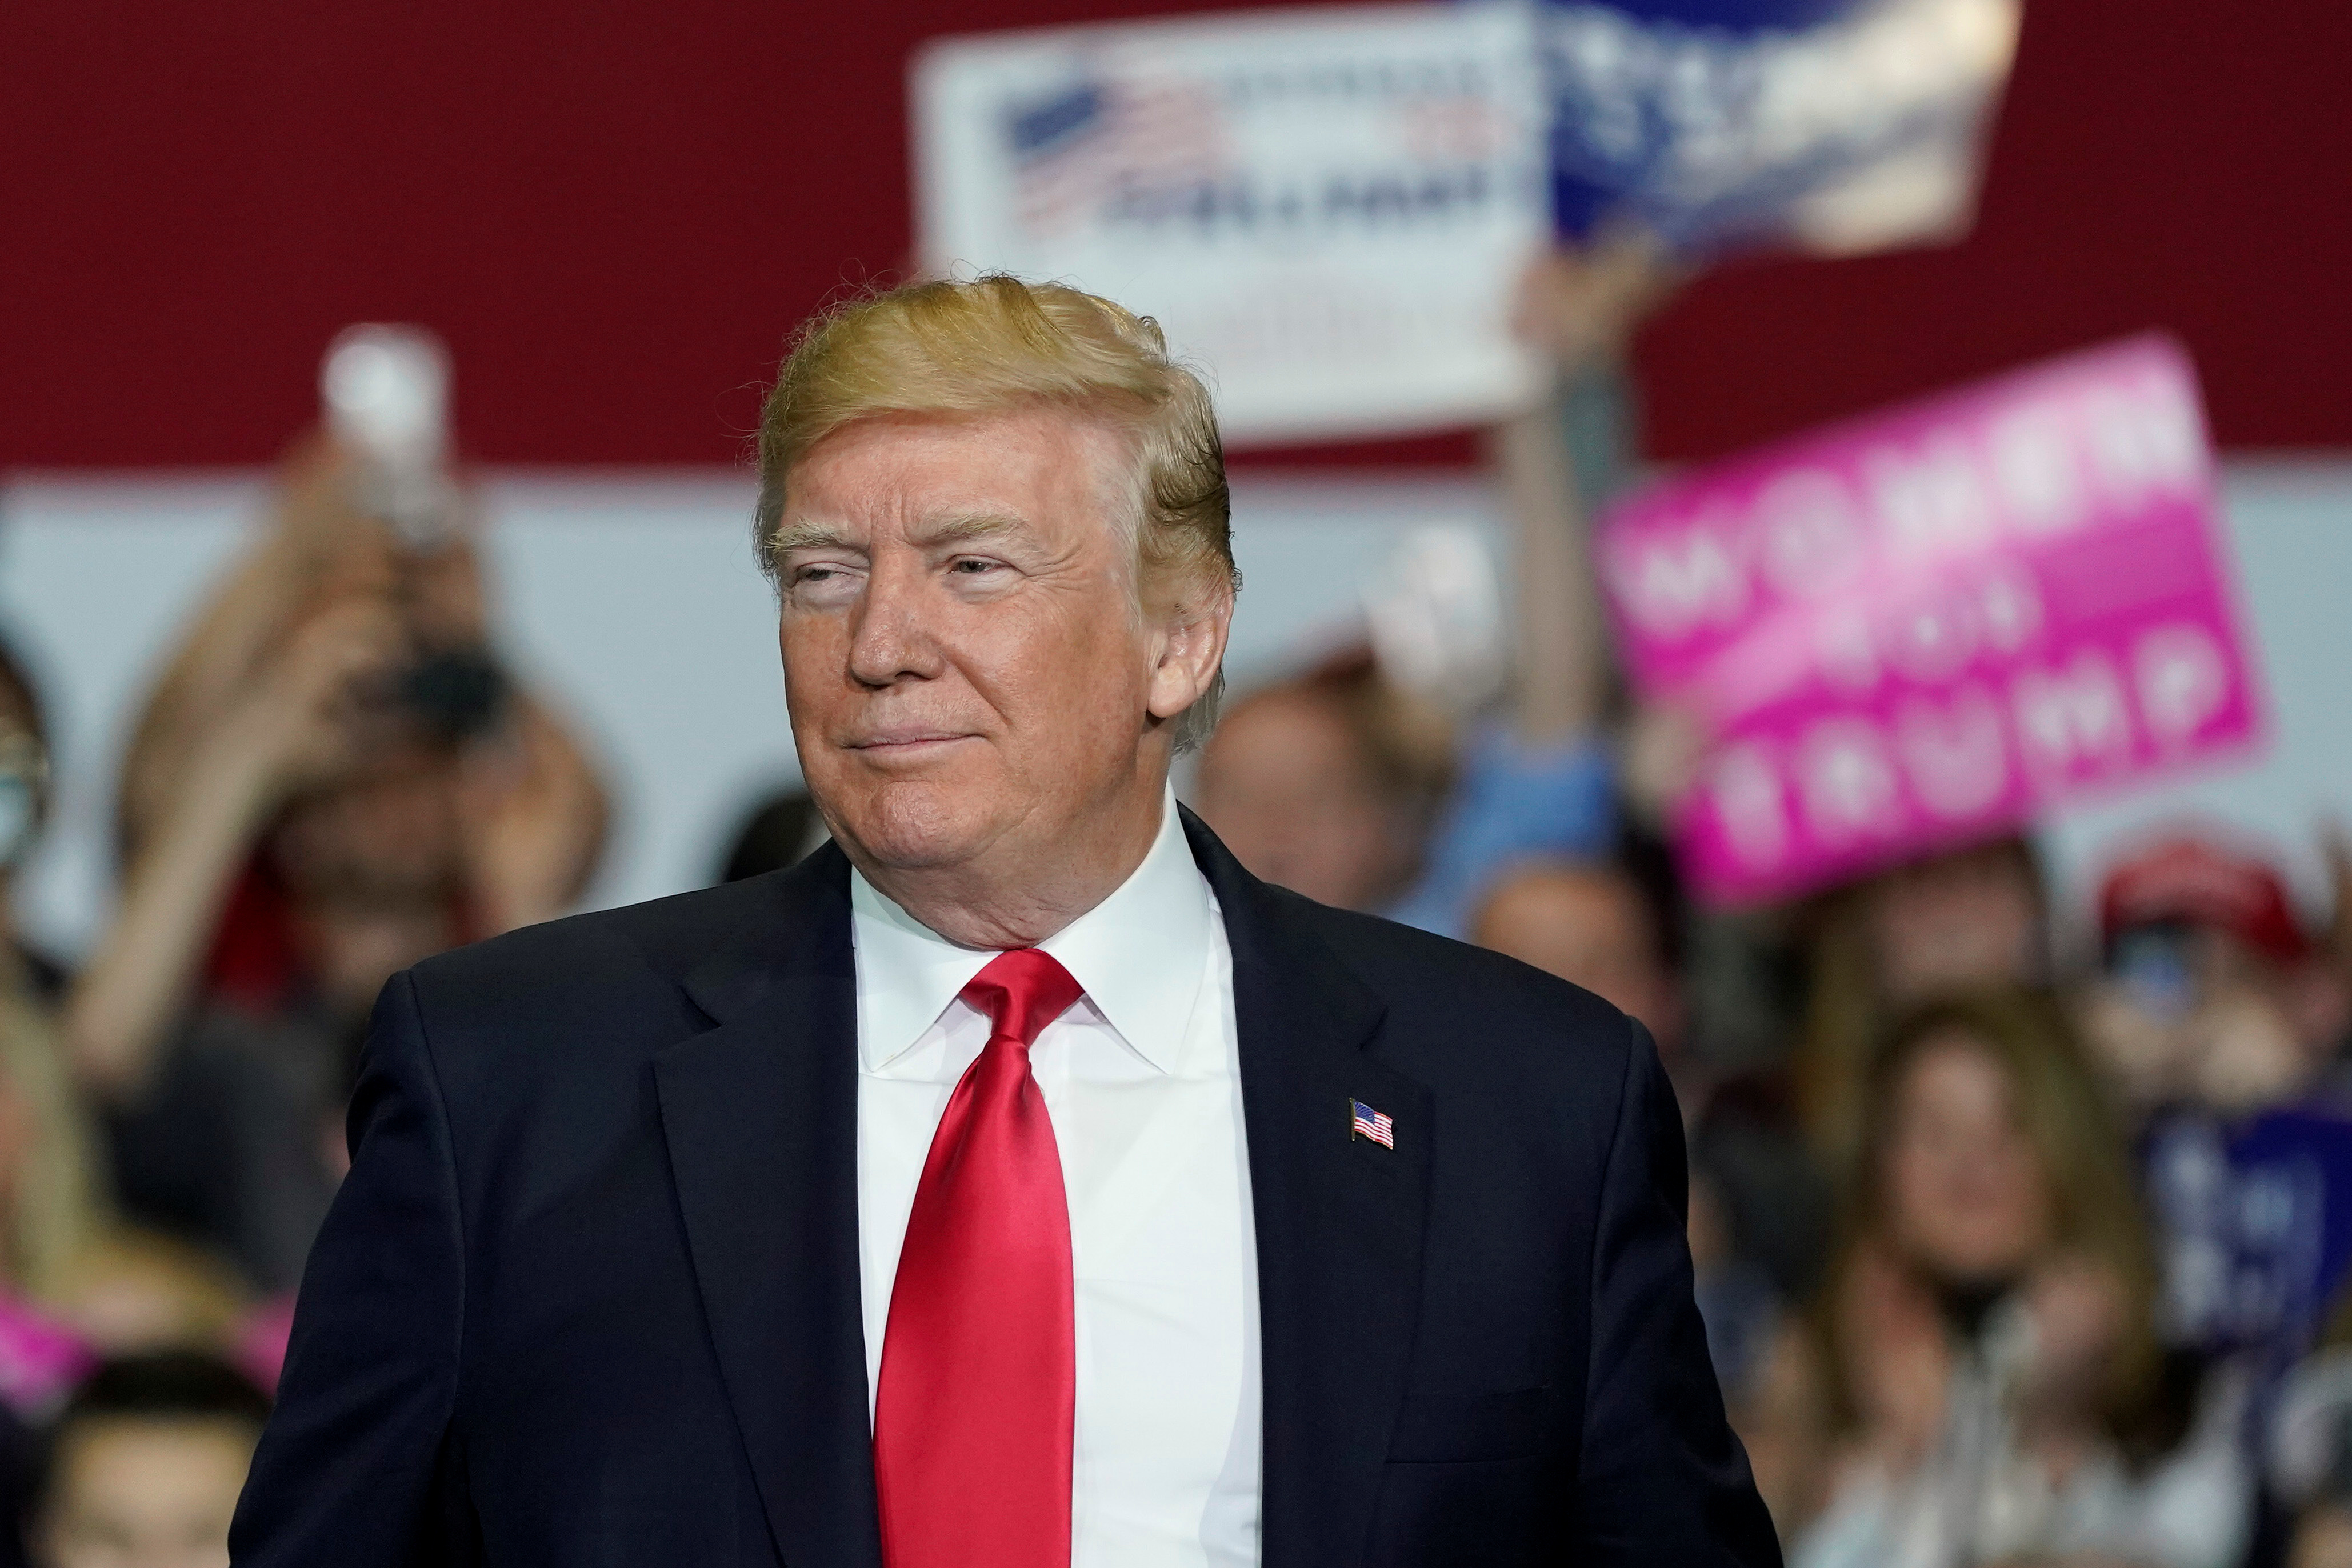 U.S. President Donald Trump arrives to speak at a Make America Great Again Rally in Washington, Michigan April 28, 2018. (REUTERS/Joshua Roberts)